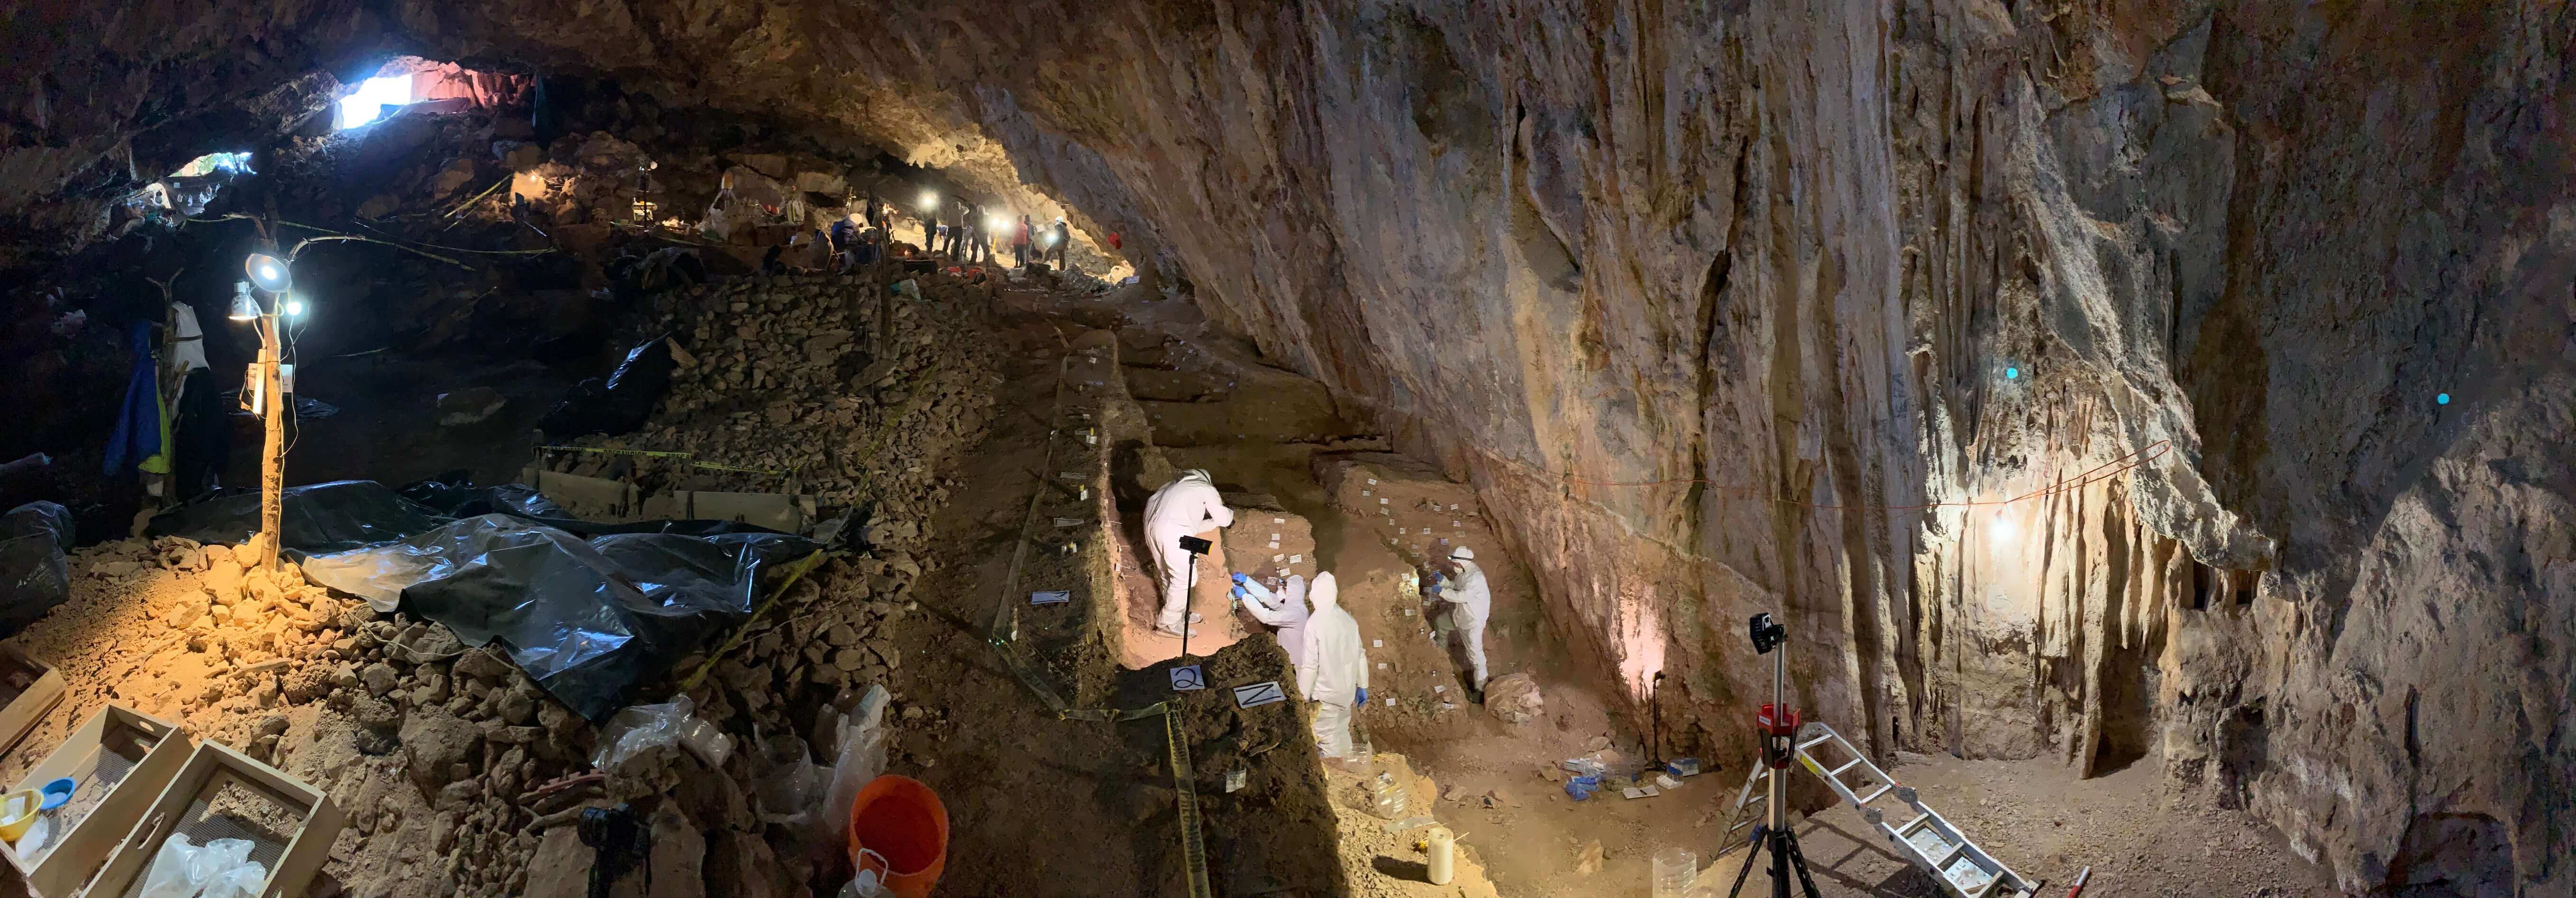 cave excavation